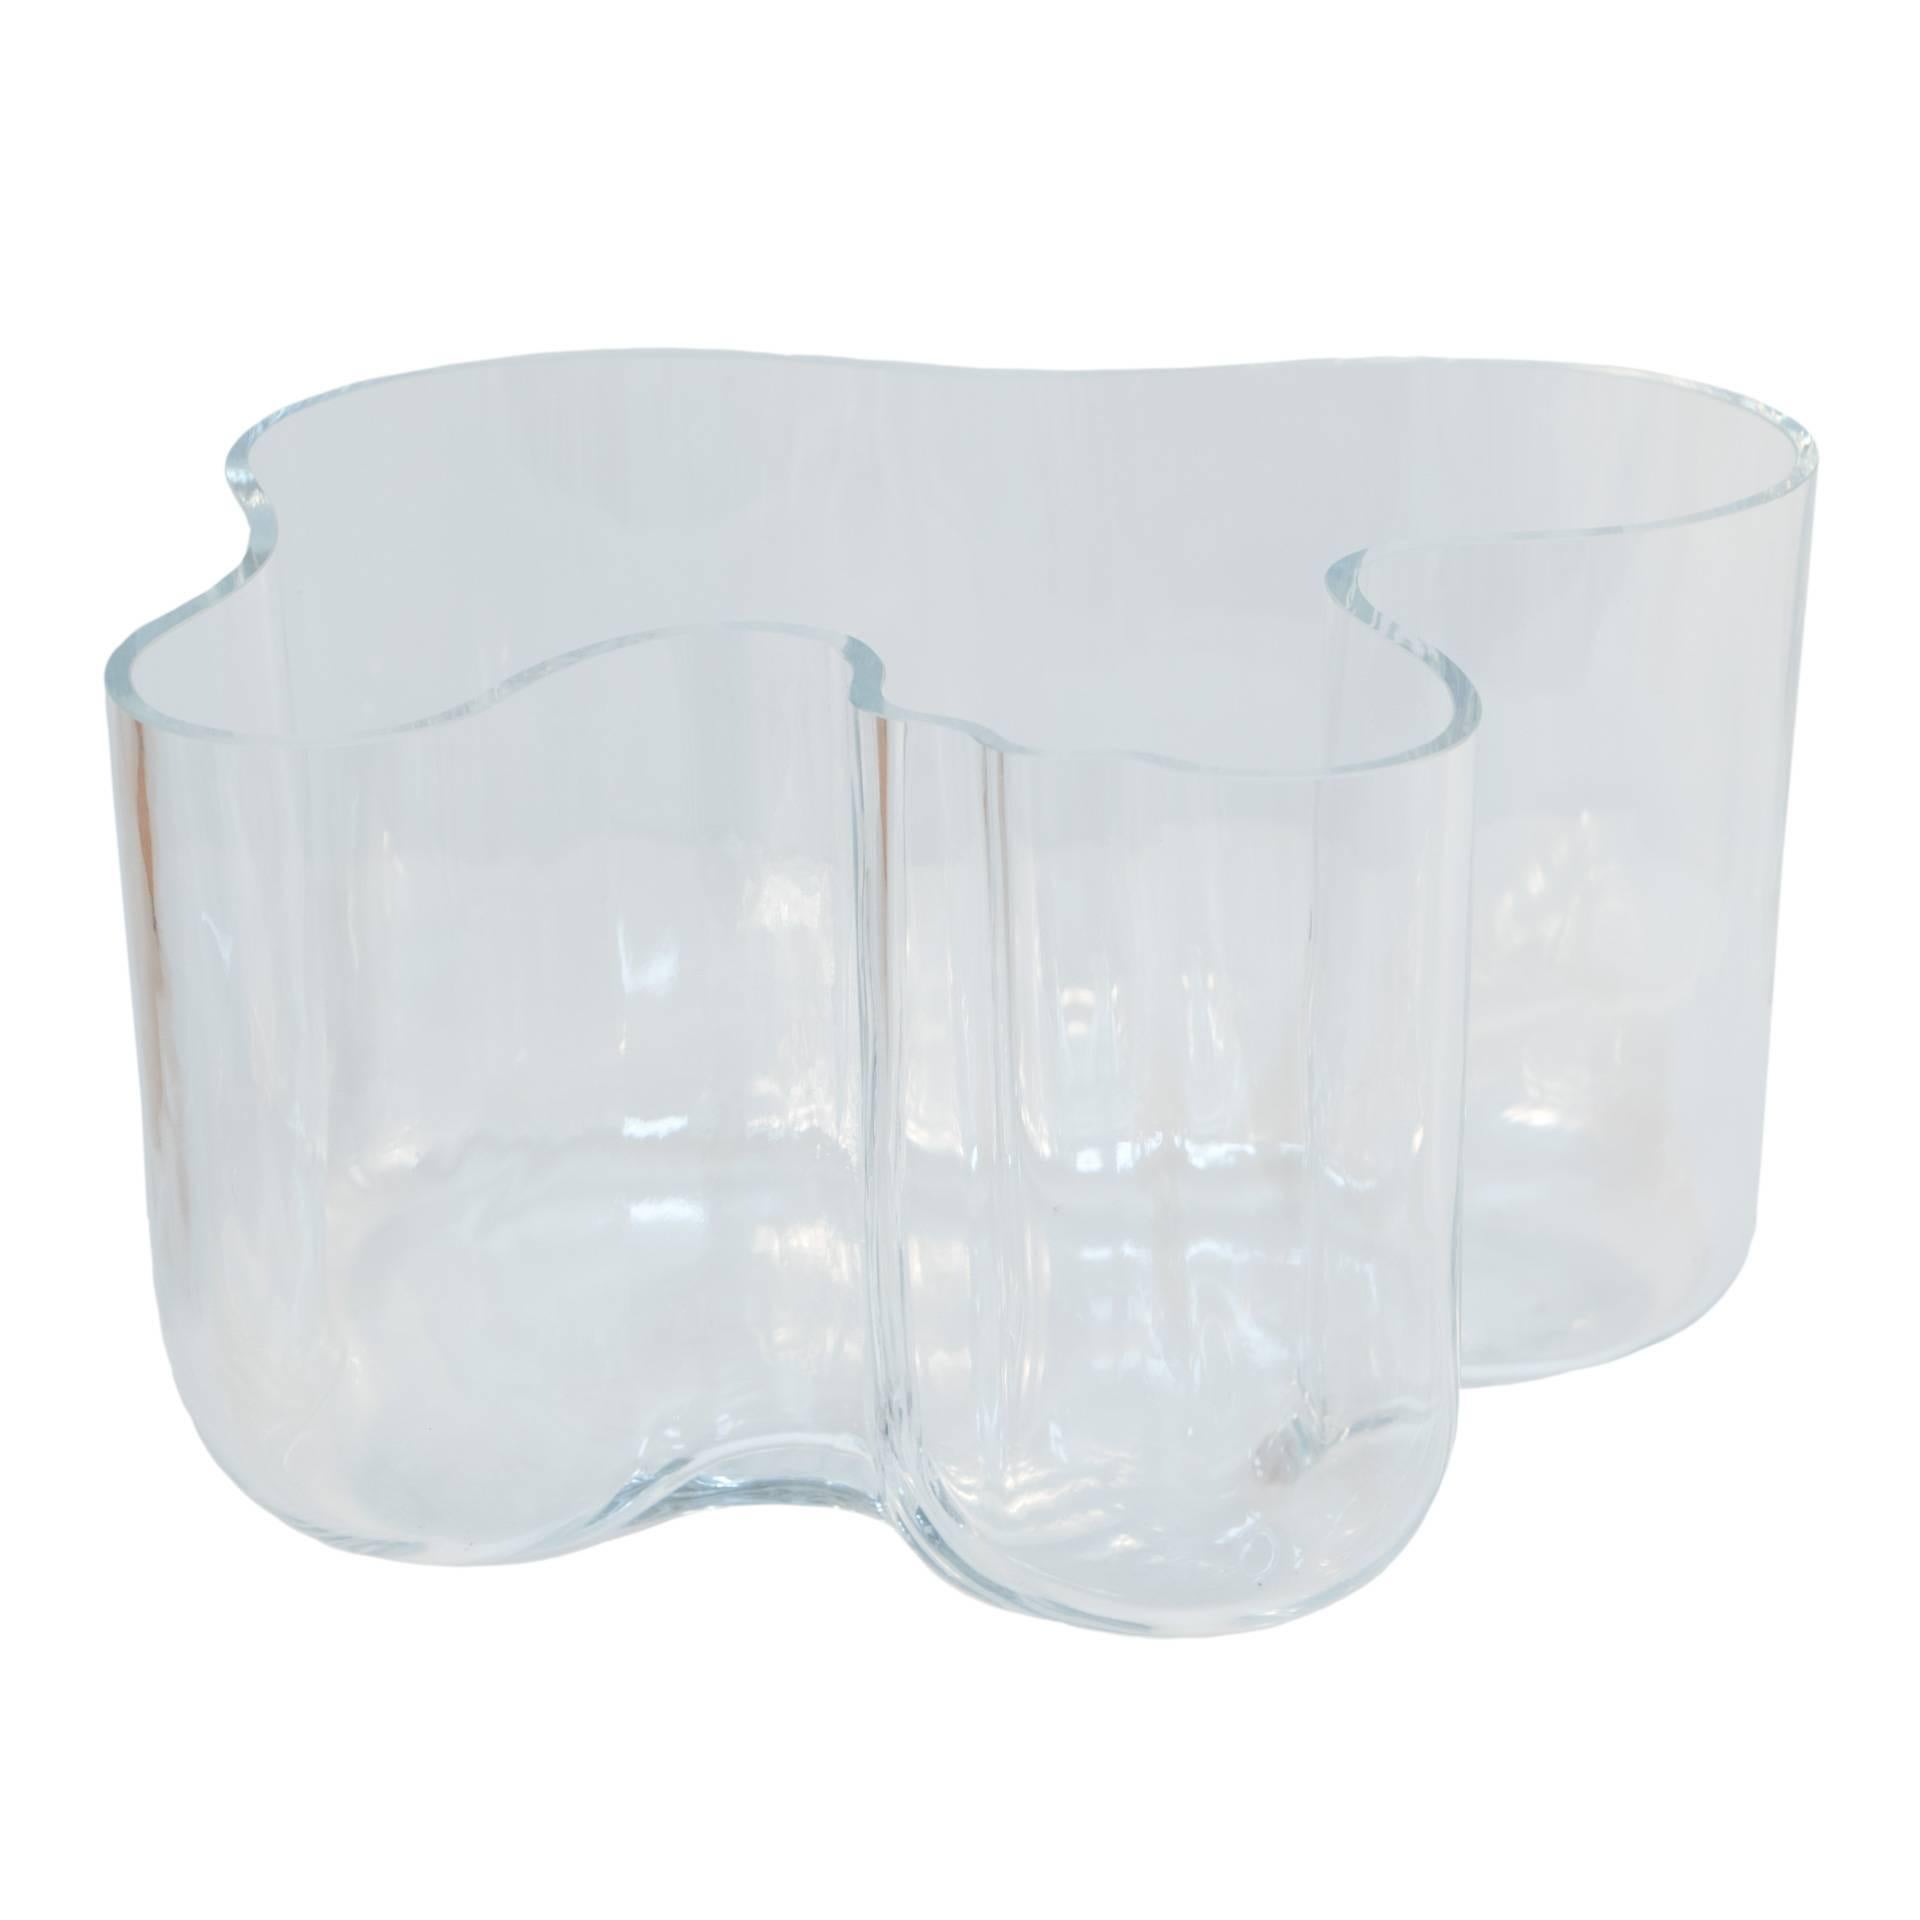 Glass vase by Alvar Aalto.